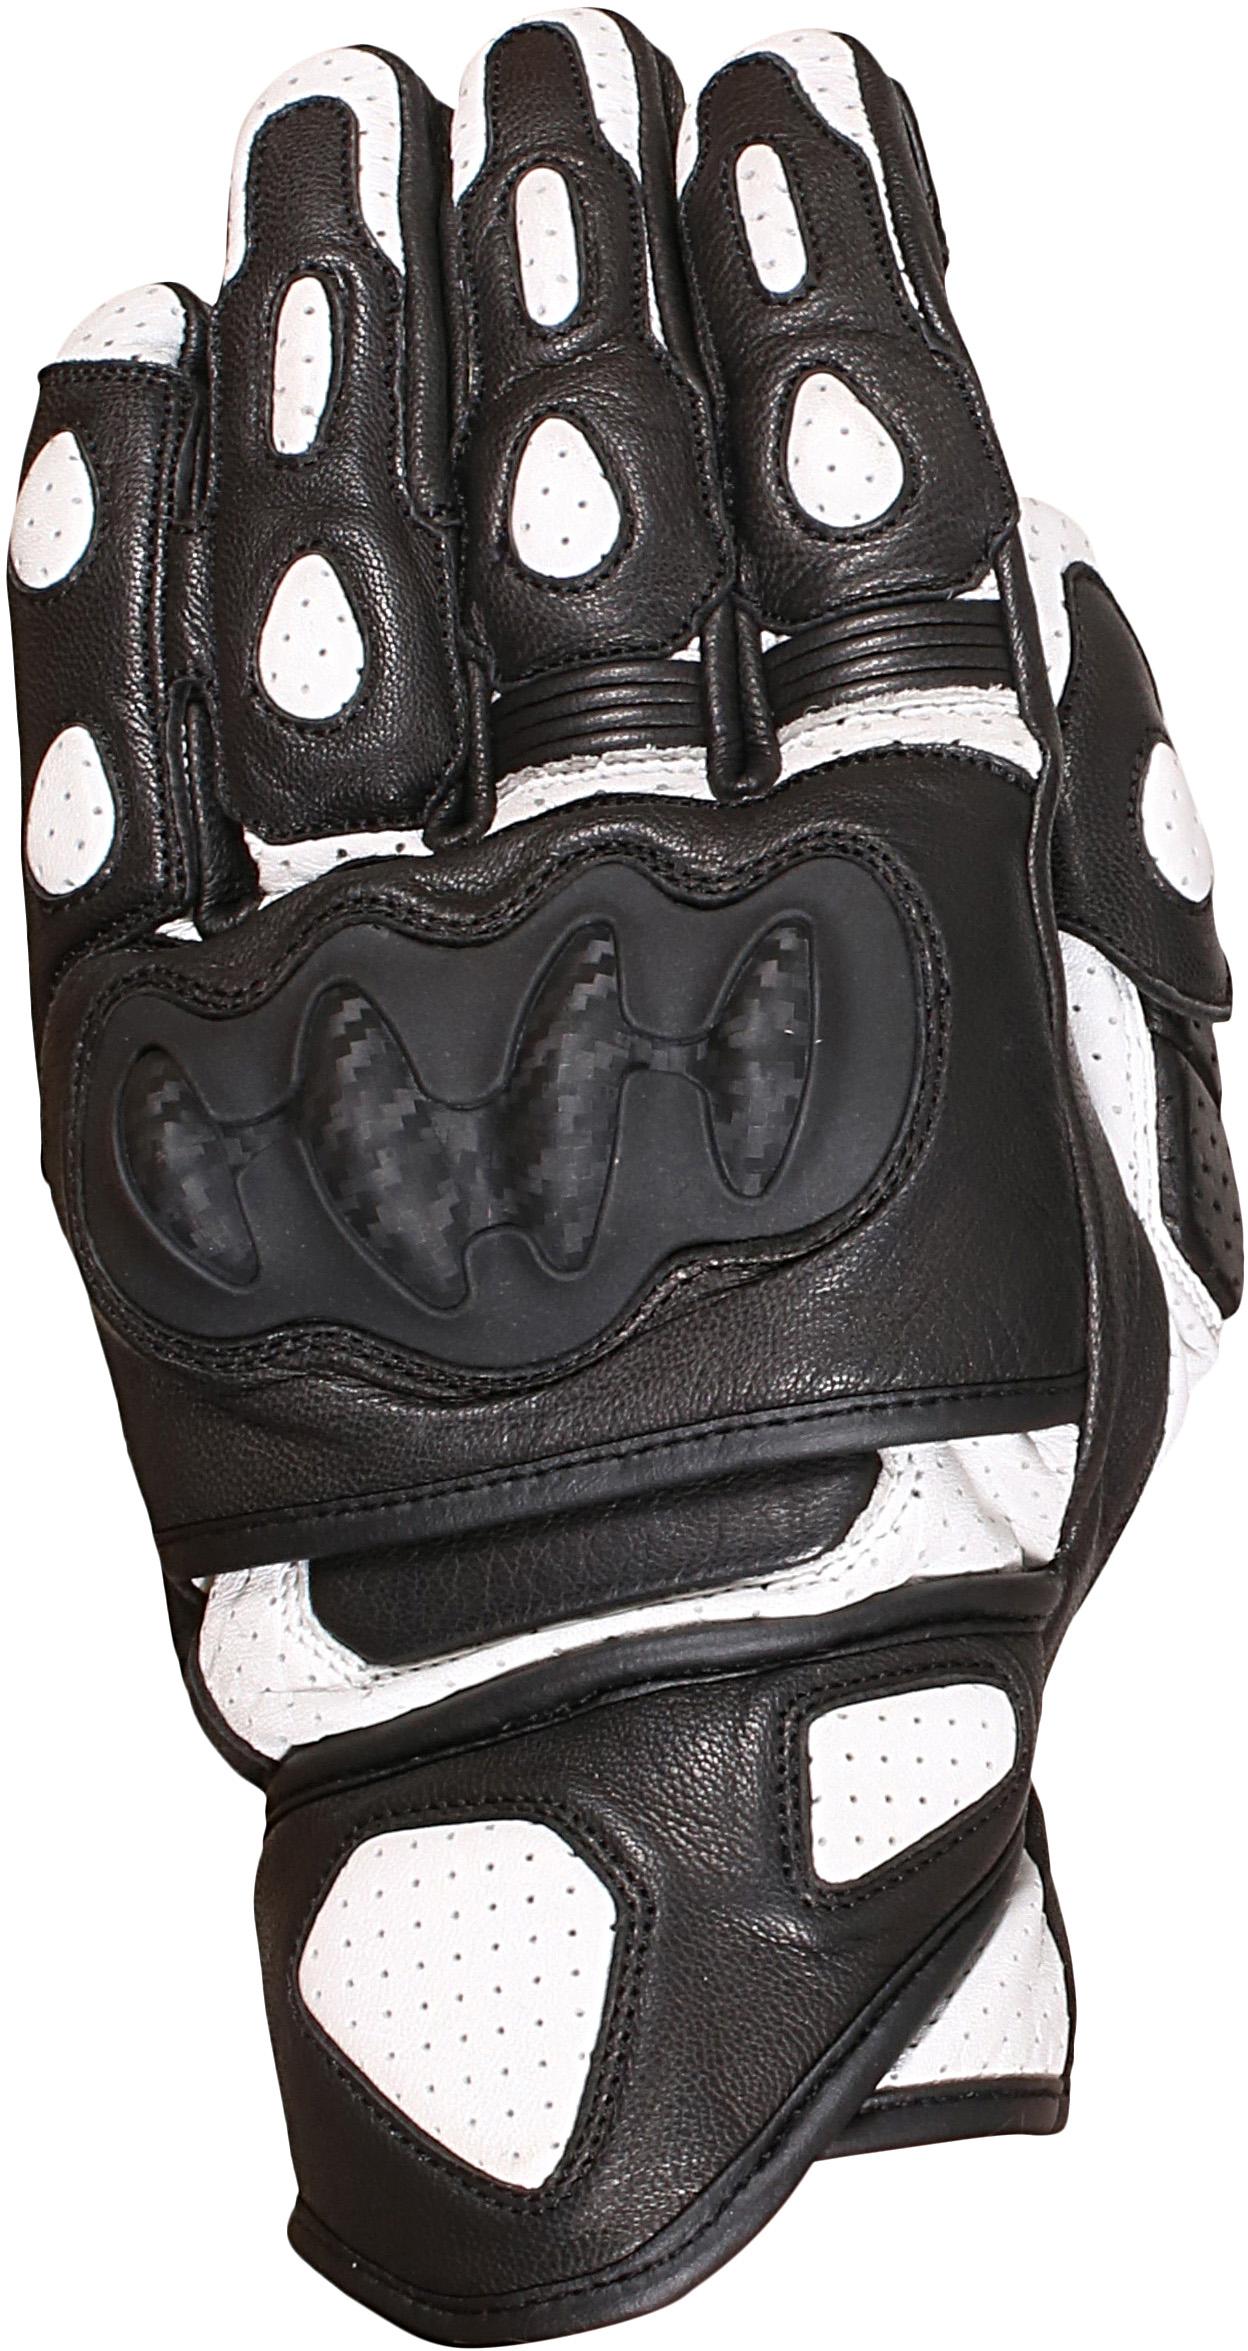 Weise Apex Motorcycle Gloves - Black/White, Xl